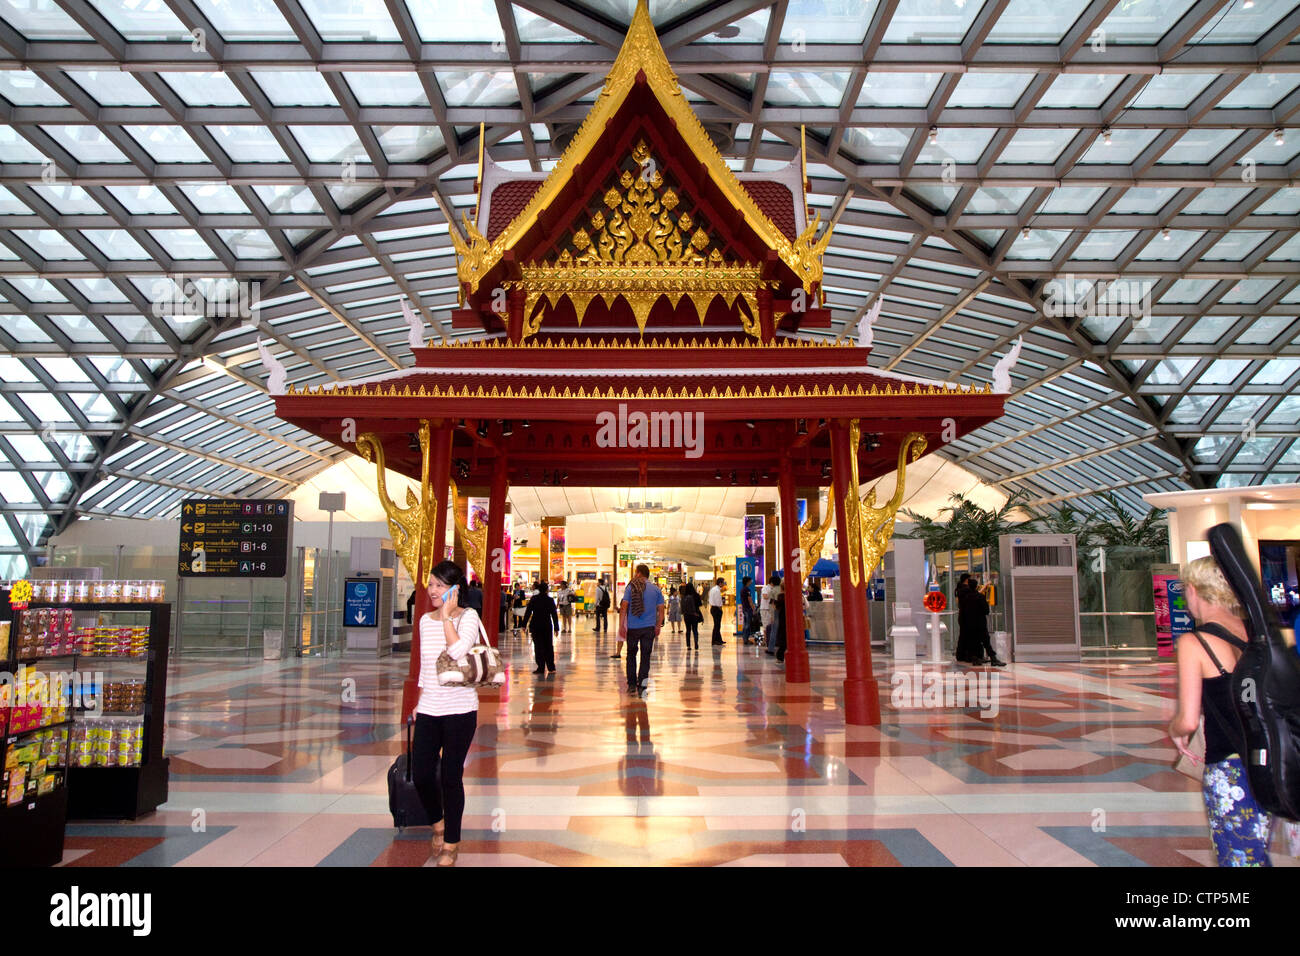 Thai-Architektur im Terminal am Flughafen Bangkok-Suvarnabhumi oder der New Bangkok International Airport in Bangkok, Thailand. Stockfoto